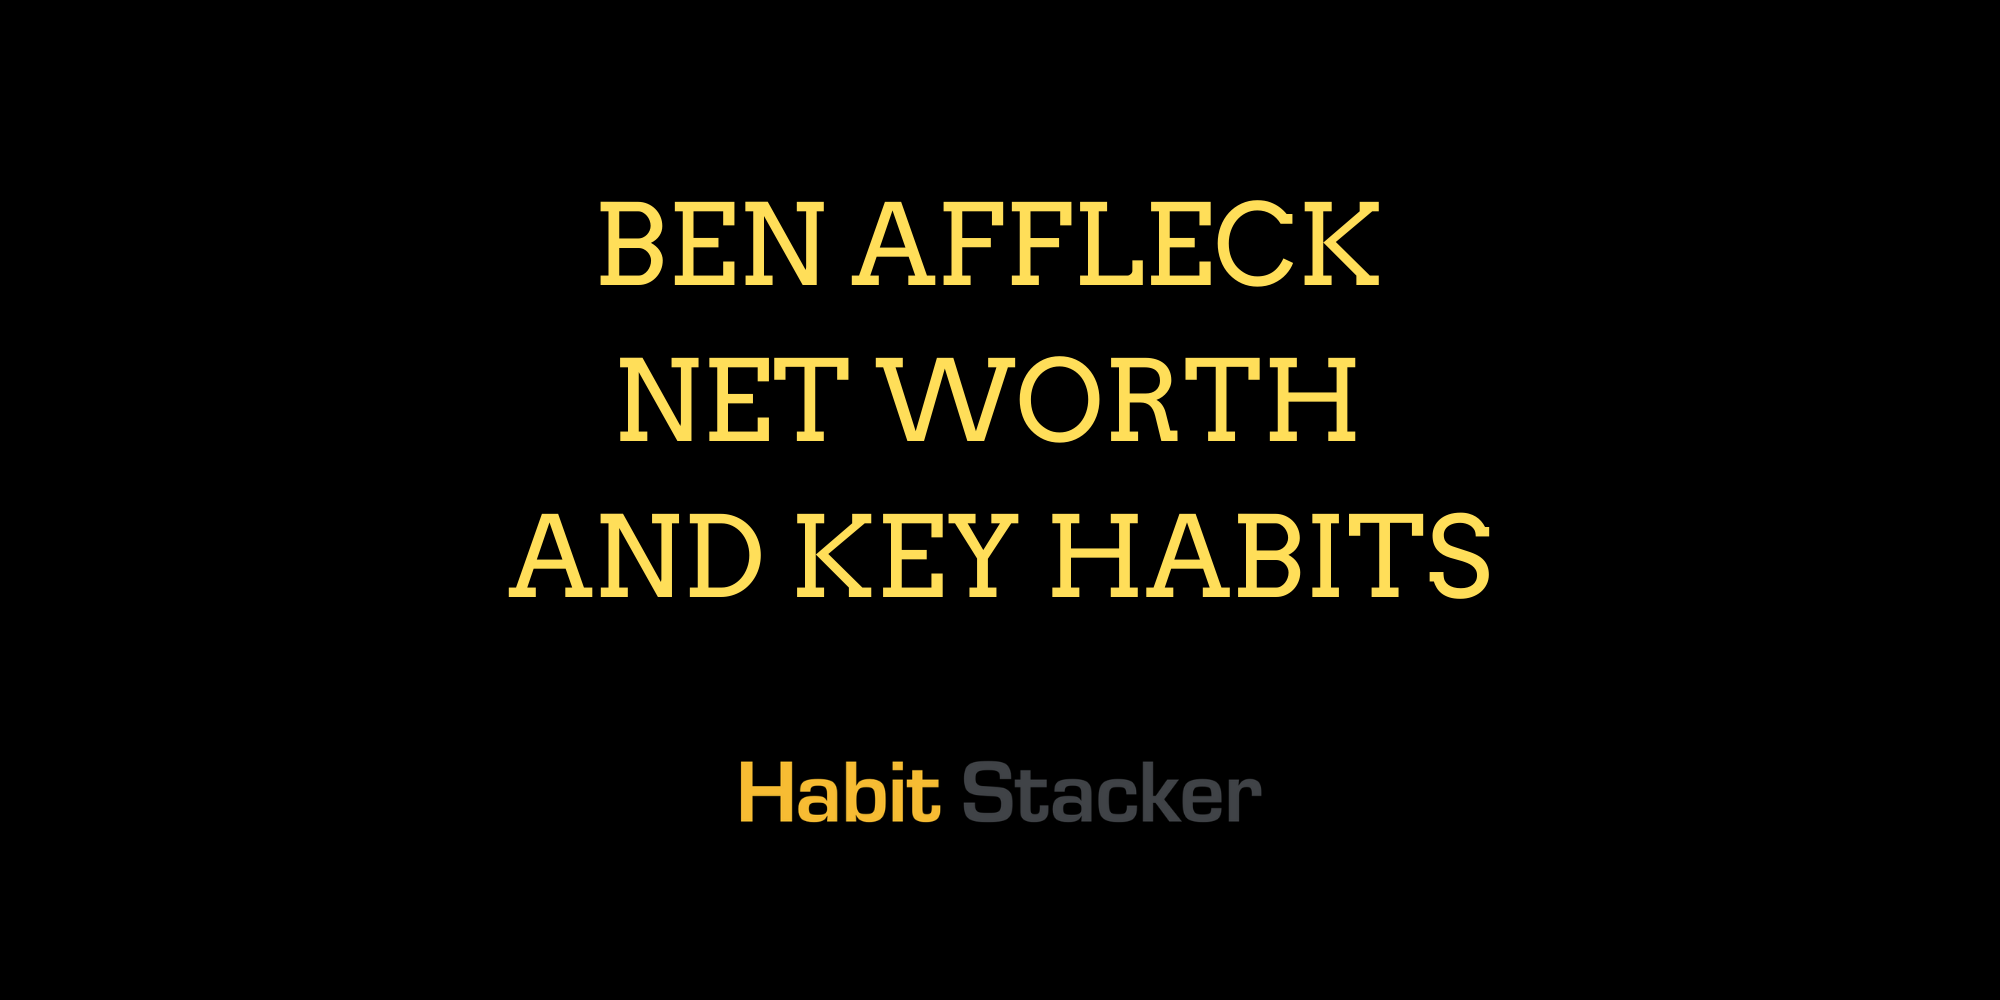 Ben Affleck Net Worth and Key Habits